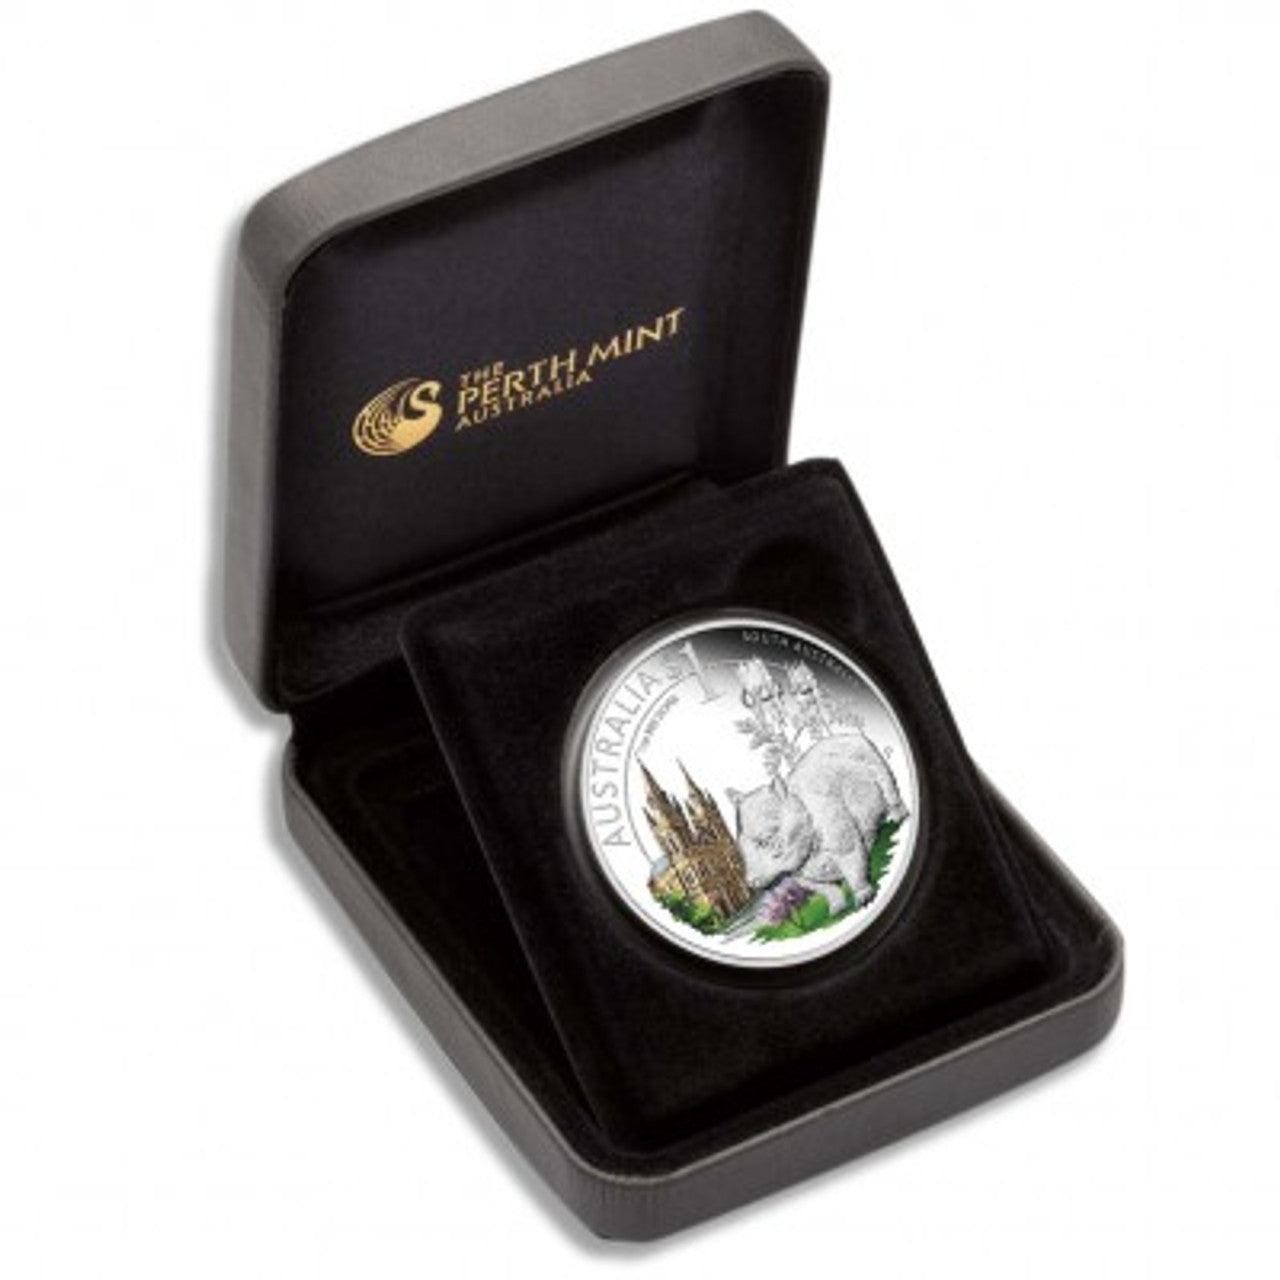 2010 $1 Coin - "Celebrate Australia" - South Australia - 1oz Silver Proof $1 Coloured Coin - Loose Change Coins